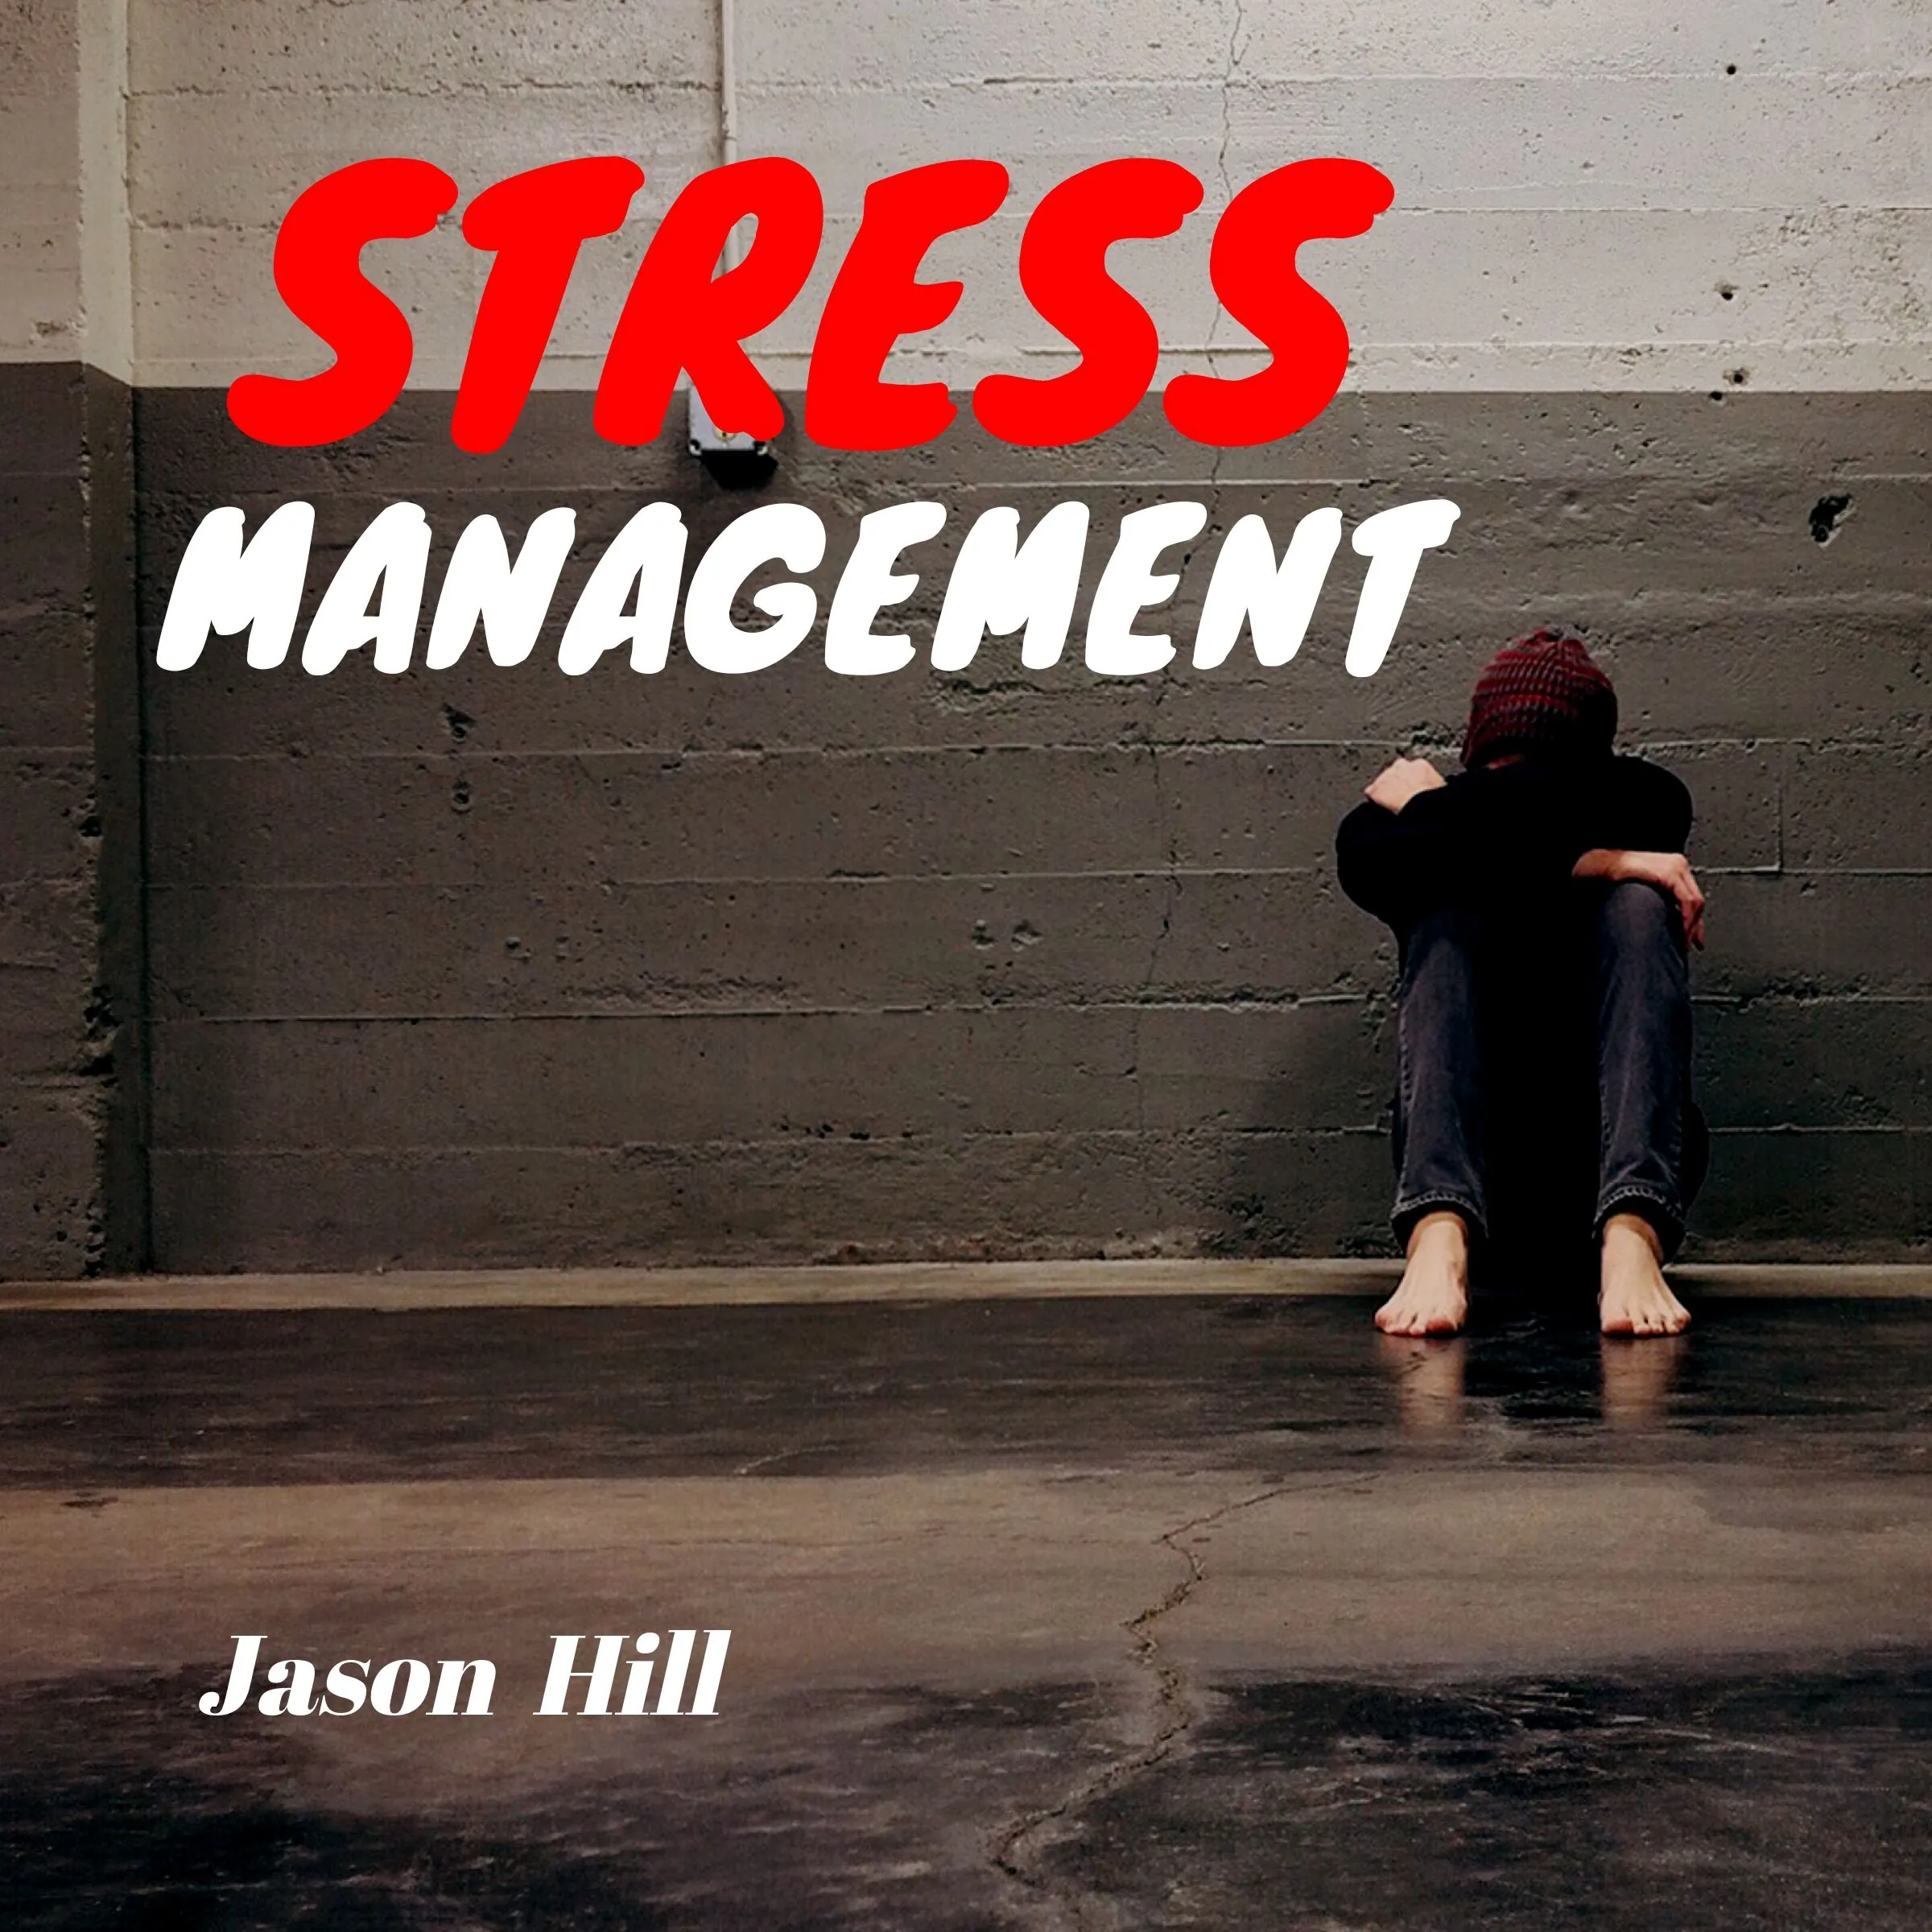 Stress Management Audiobook by Jason Hill